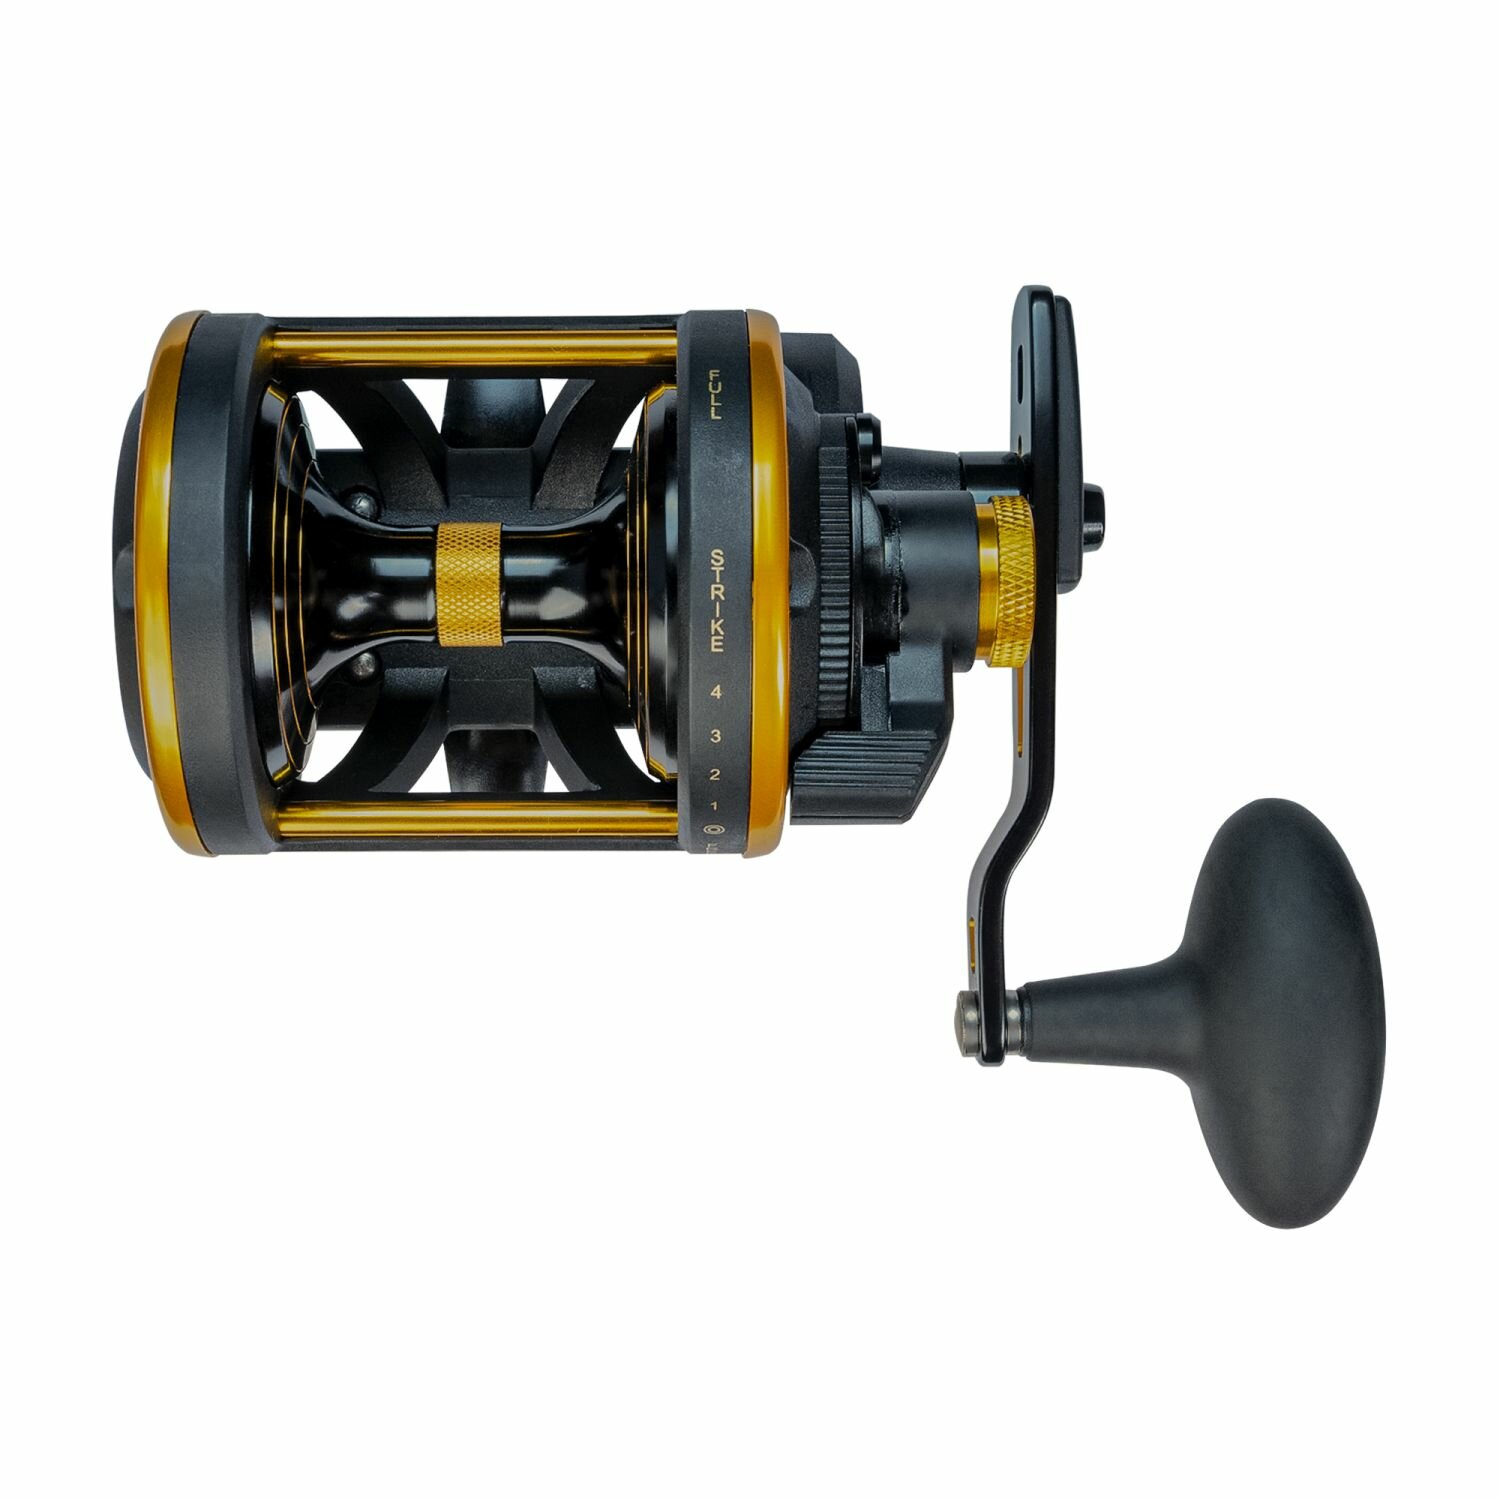 Катушка для рыбалки Penn Squall Lever Drag 30 LD, мультипликаторная катушка для спиннинга